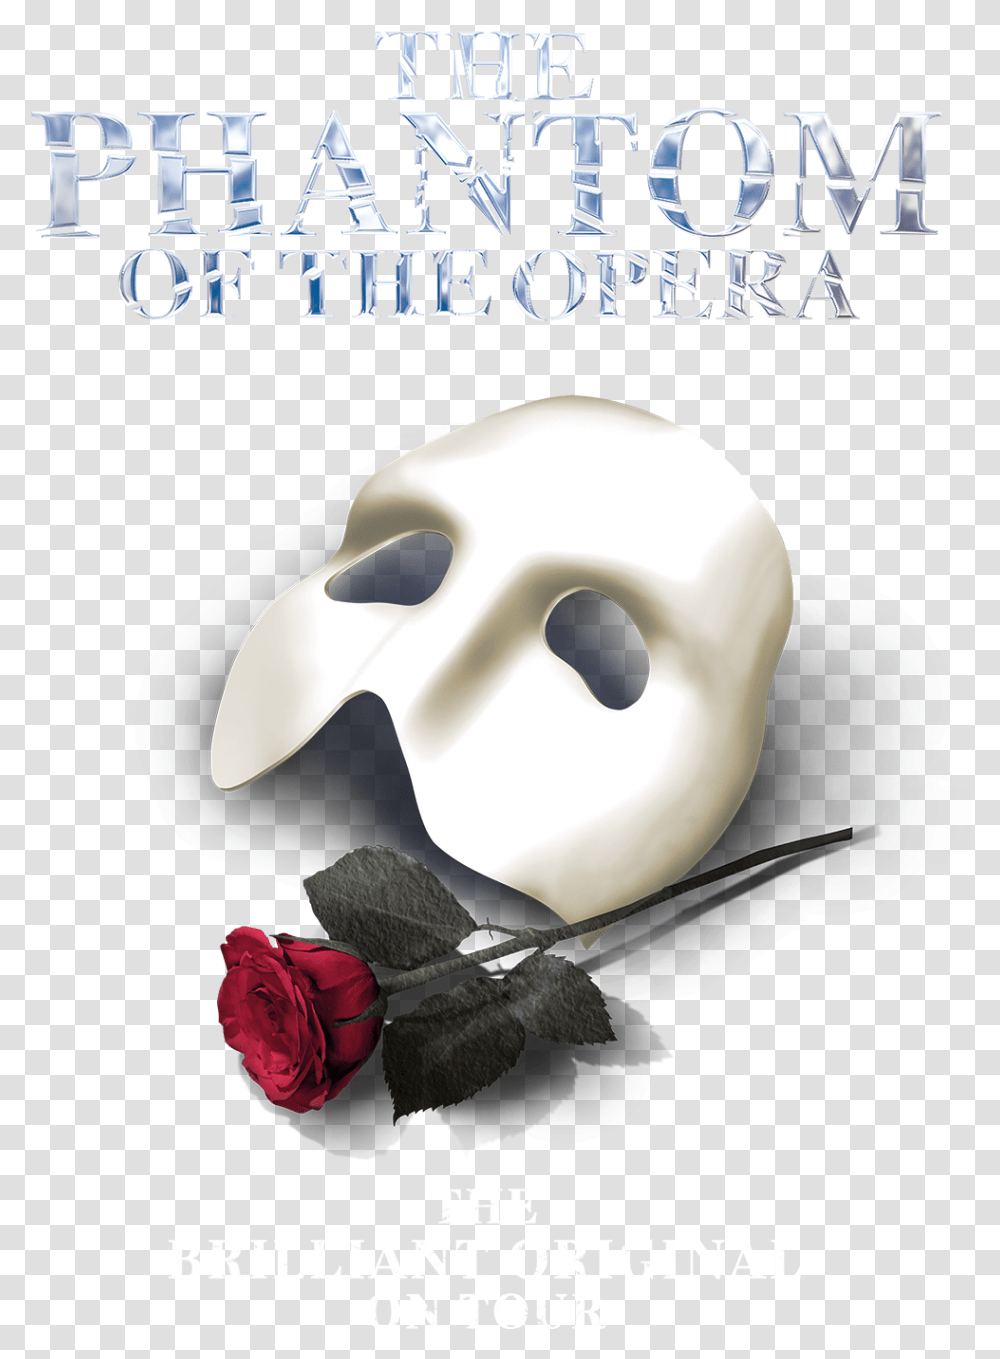 Phantom Of The Opera Mask And Rose, Flower, Plant, Blossom, Giant Panda Transparent Png